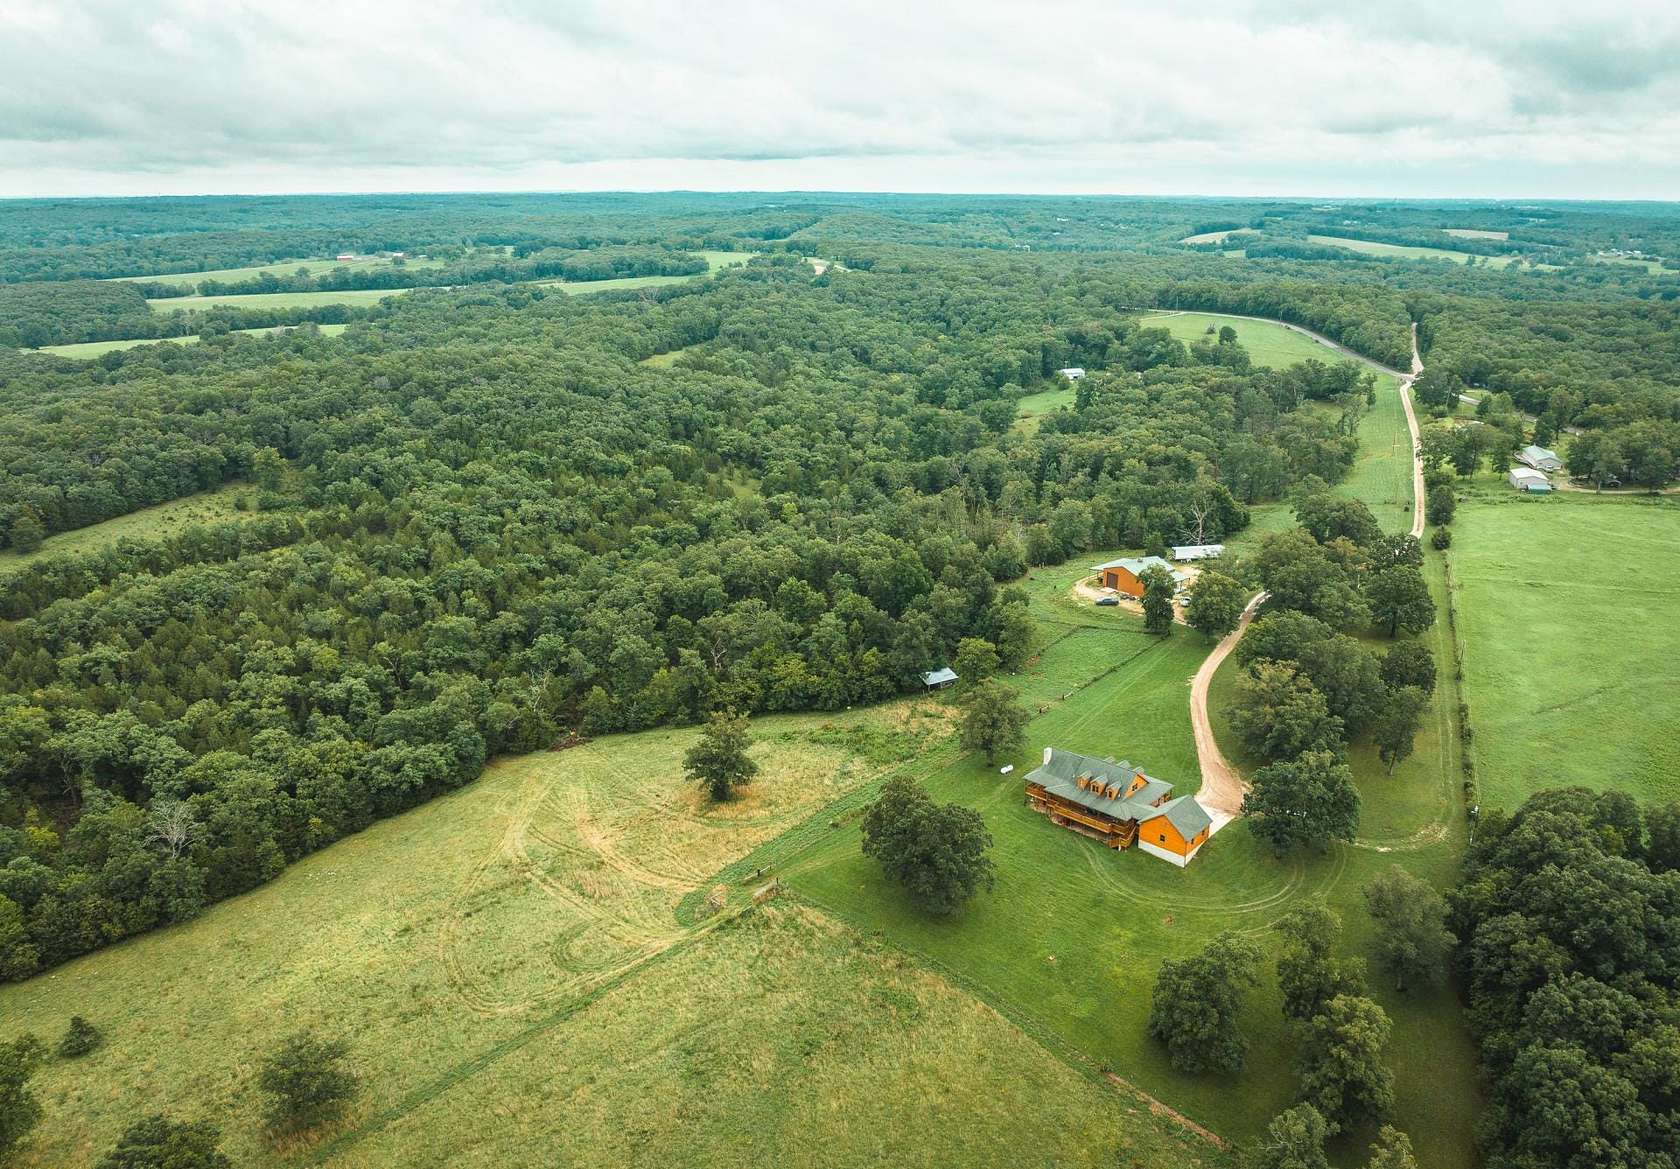 48 Acres of Improved Recreational Land & Farm for Sale in Sullivan, Missouri